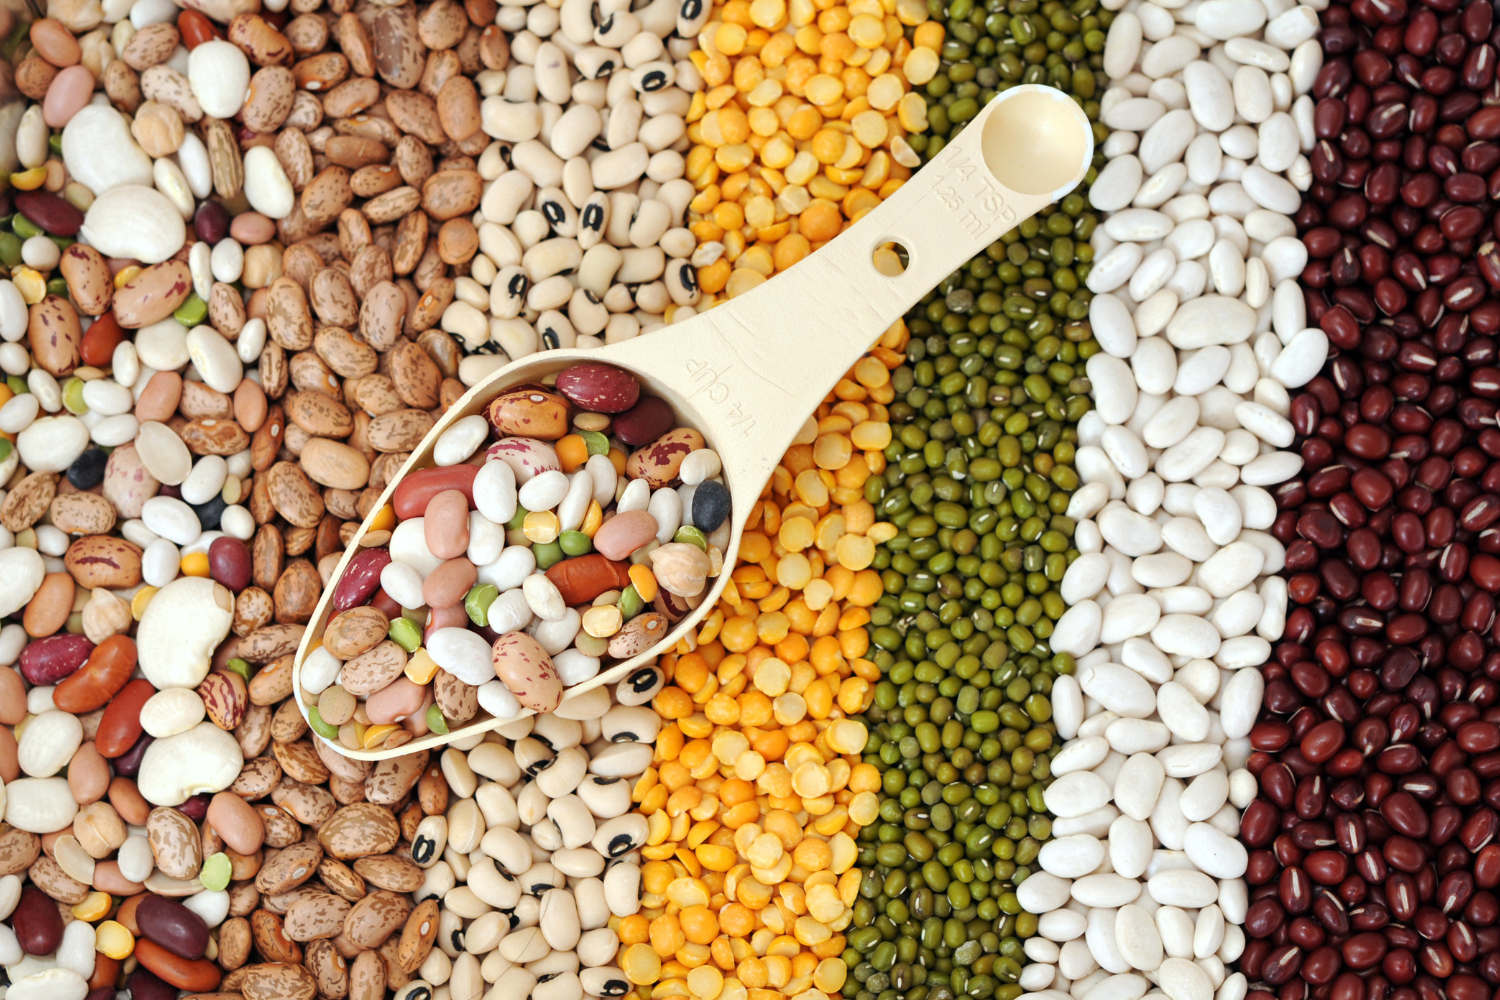 cheap healthy meals beans